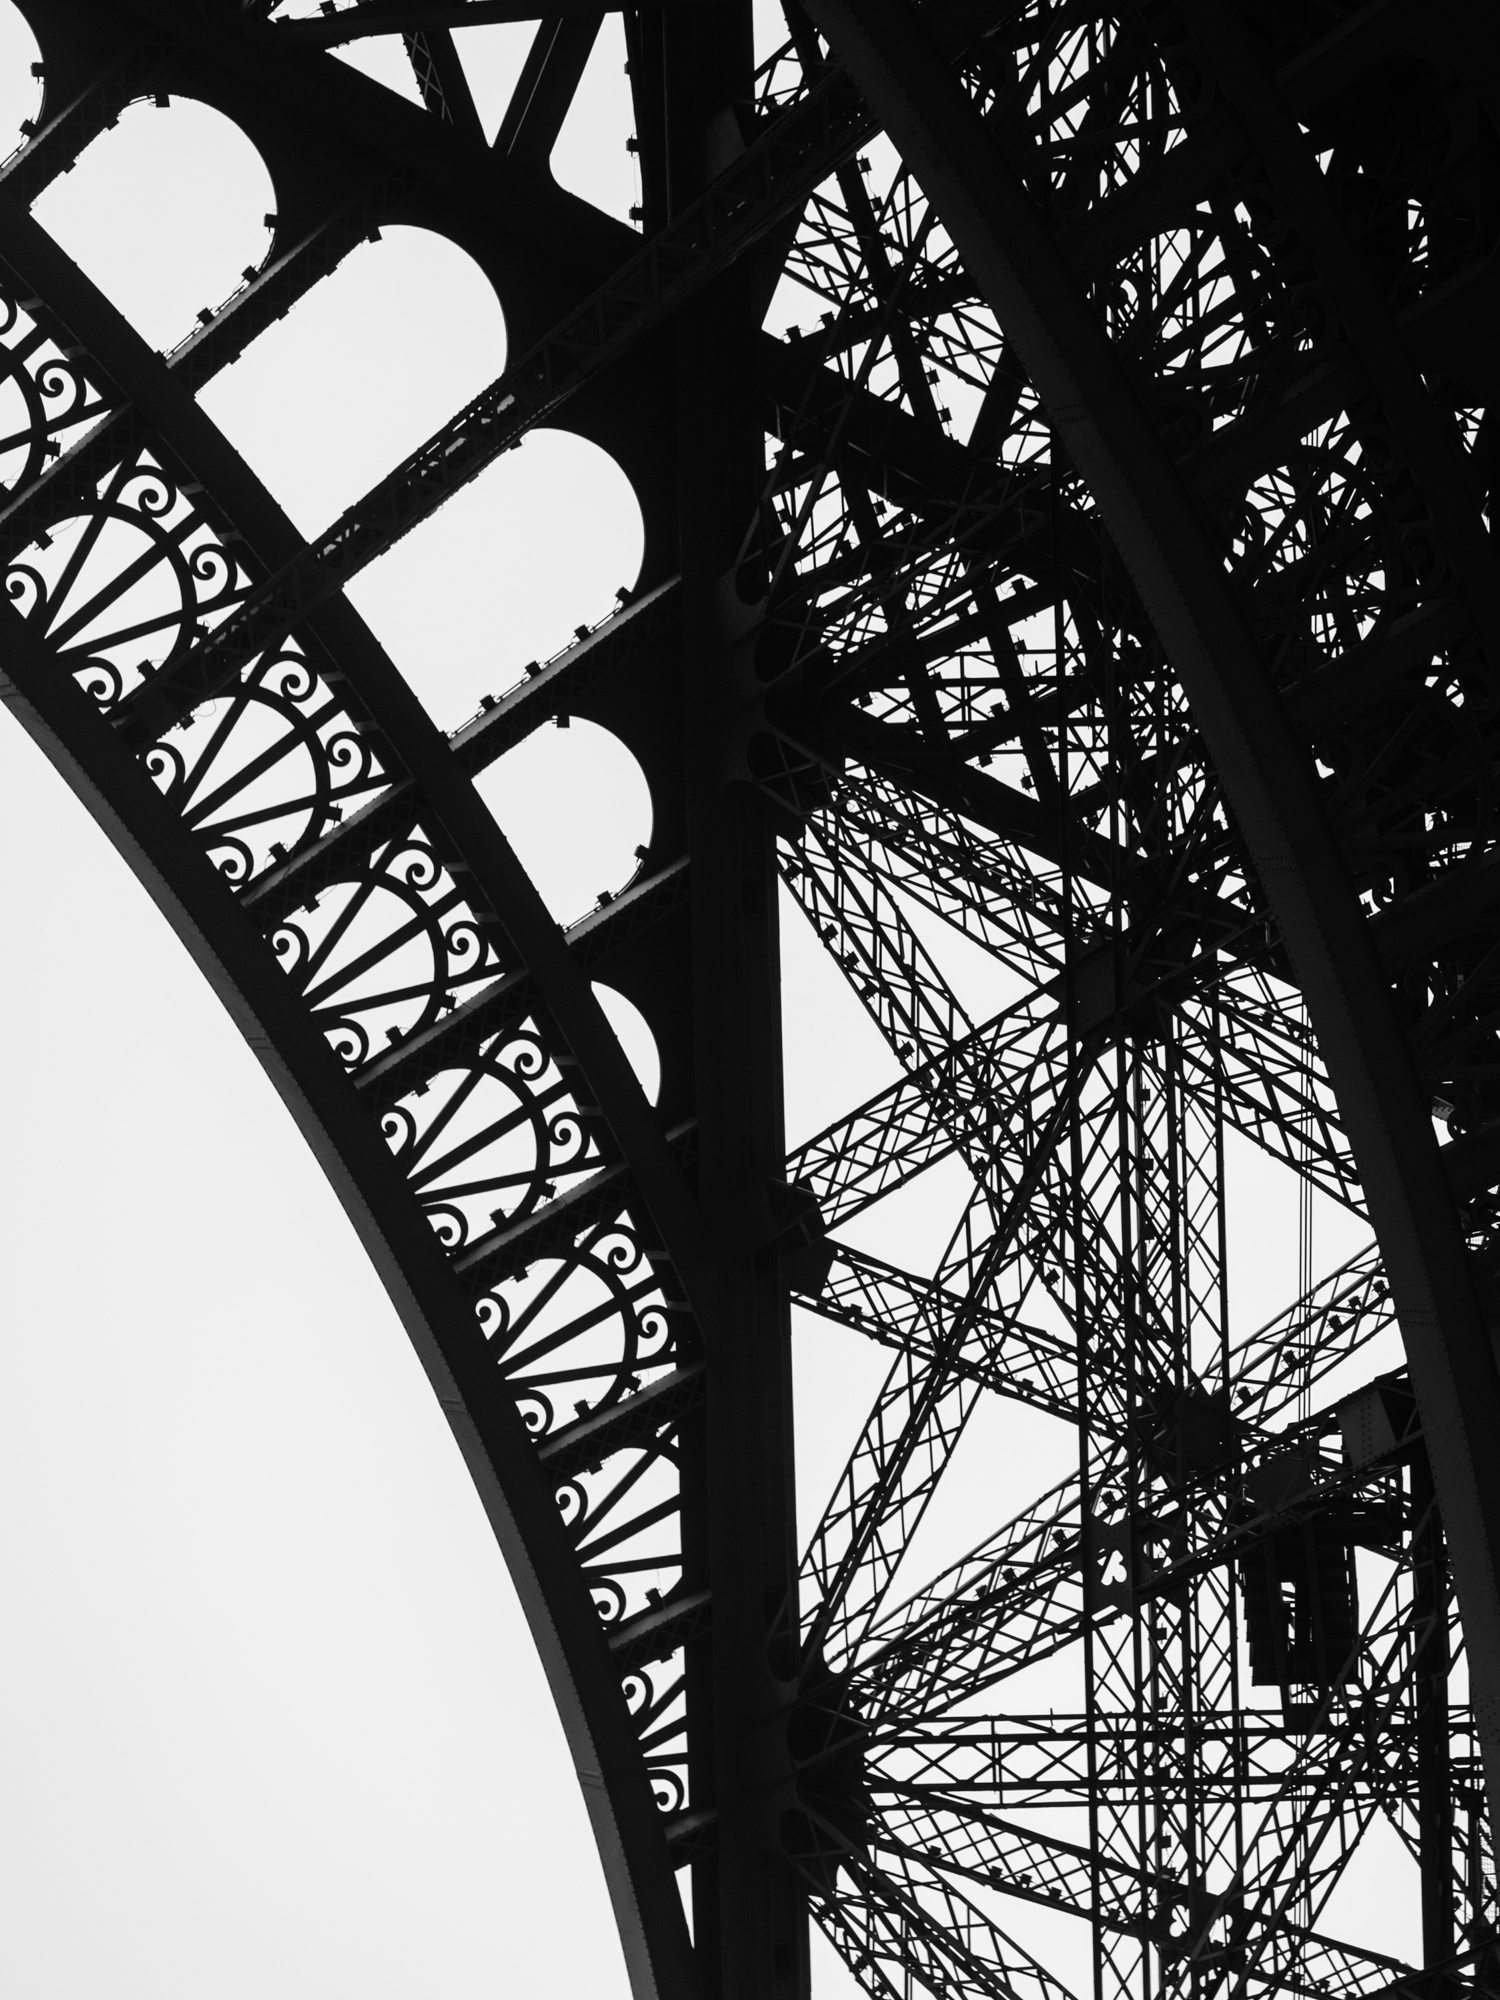 Paris France travel photography